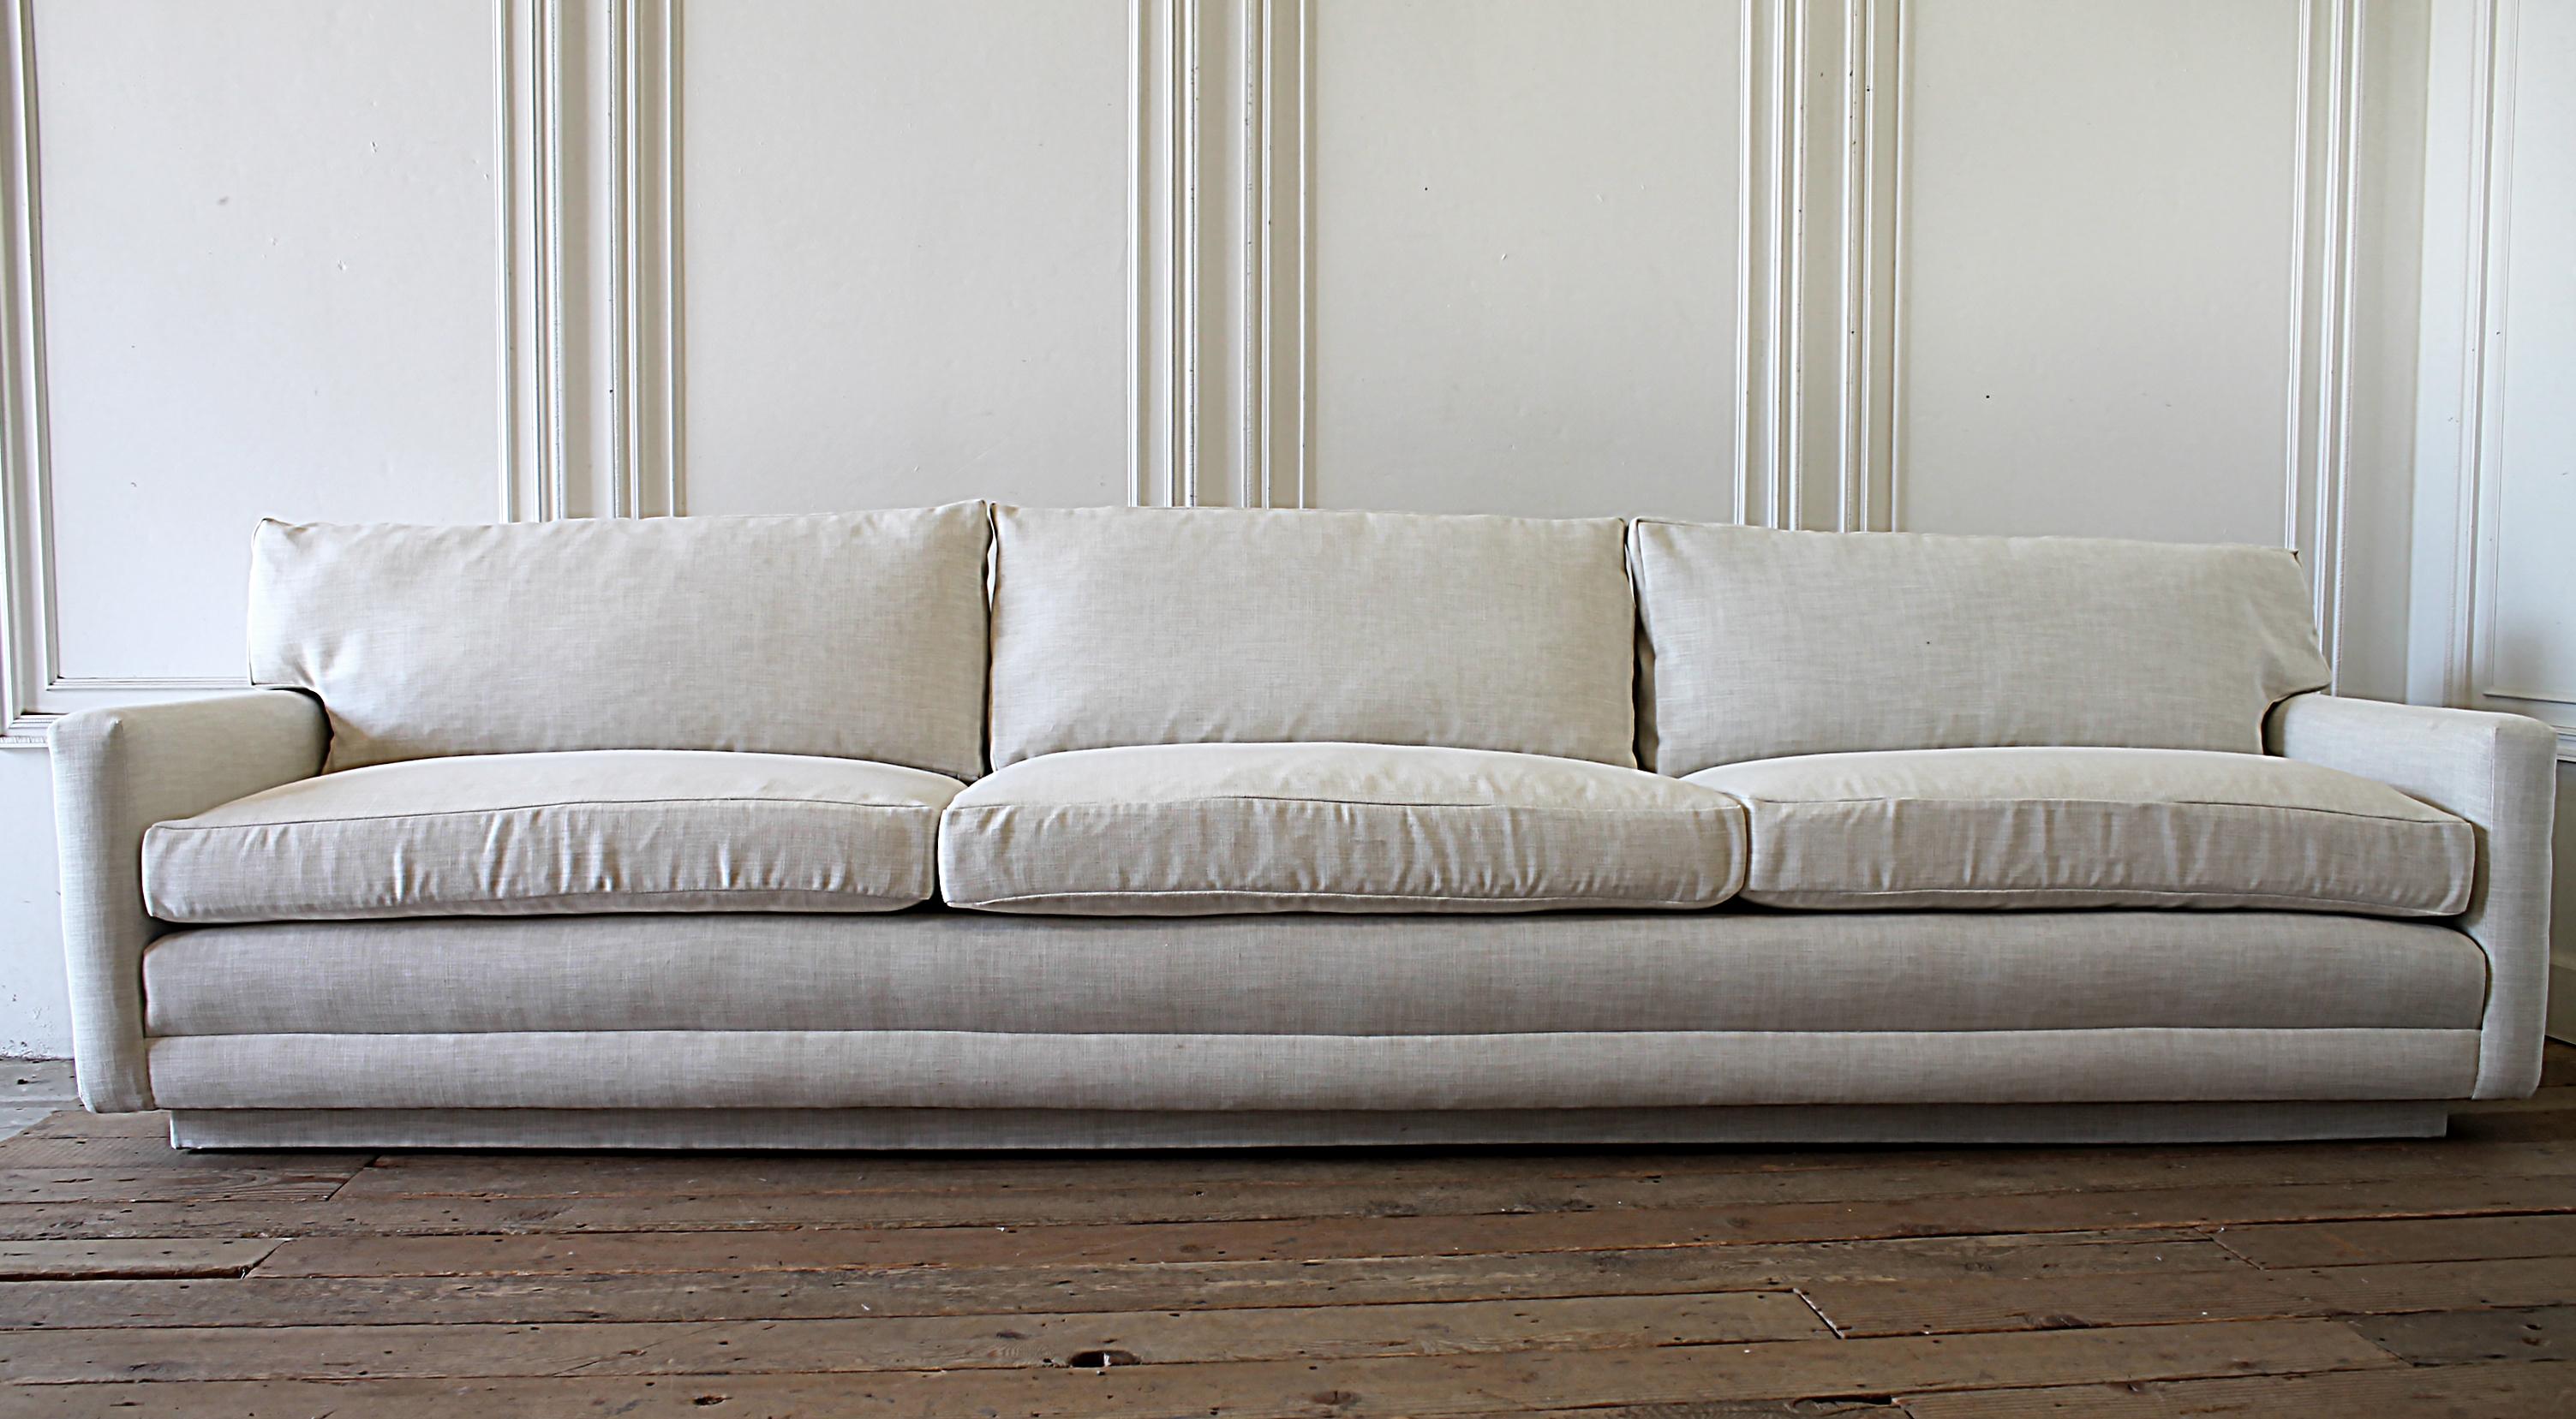 North American Mid-Century Modern Sofa Reupholstered in Natural Linen Blend Herringbone